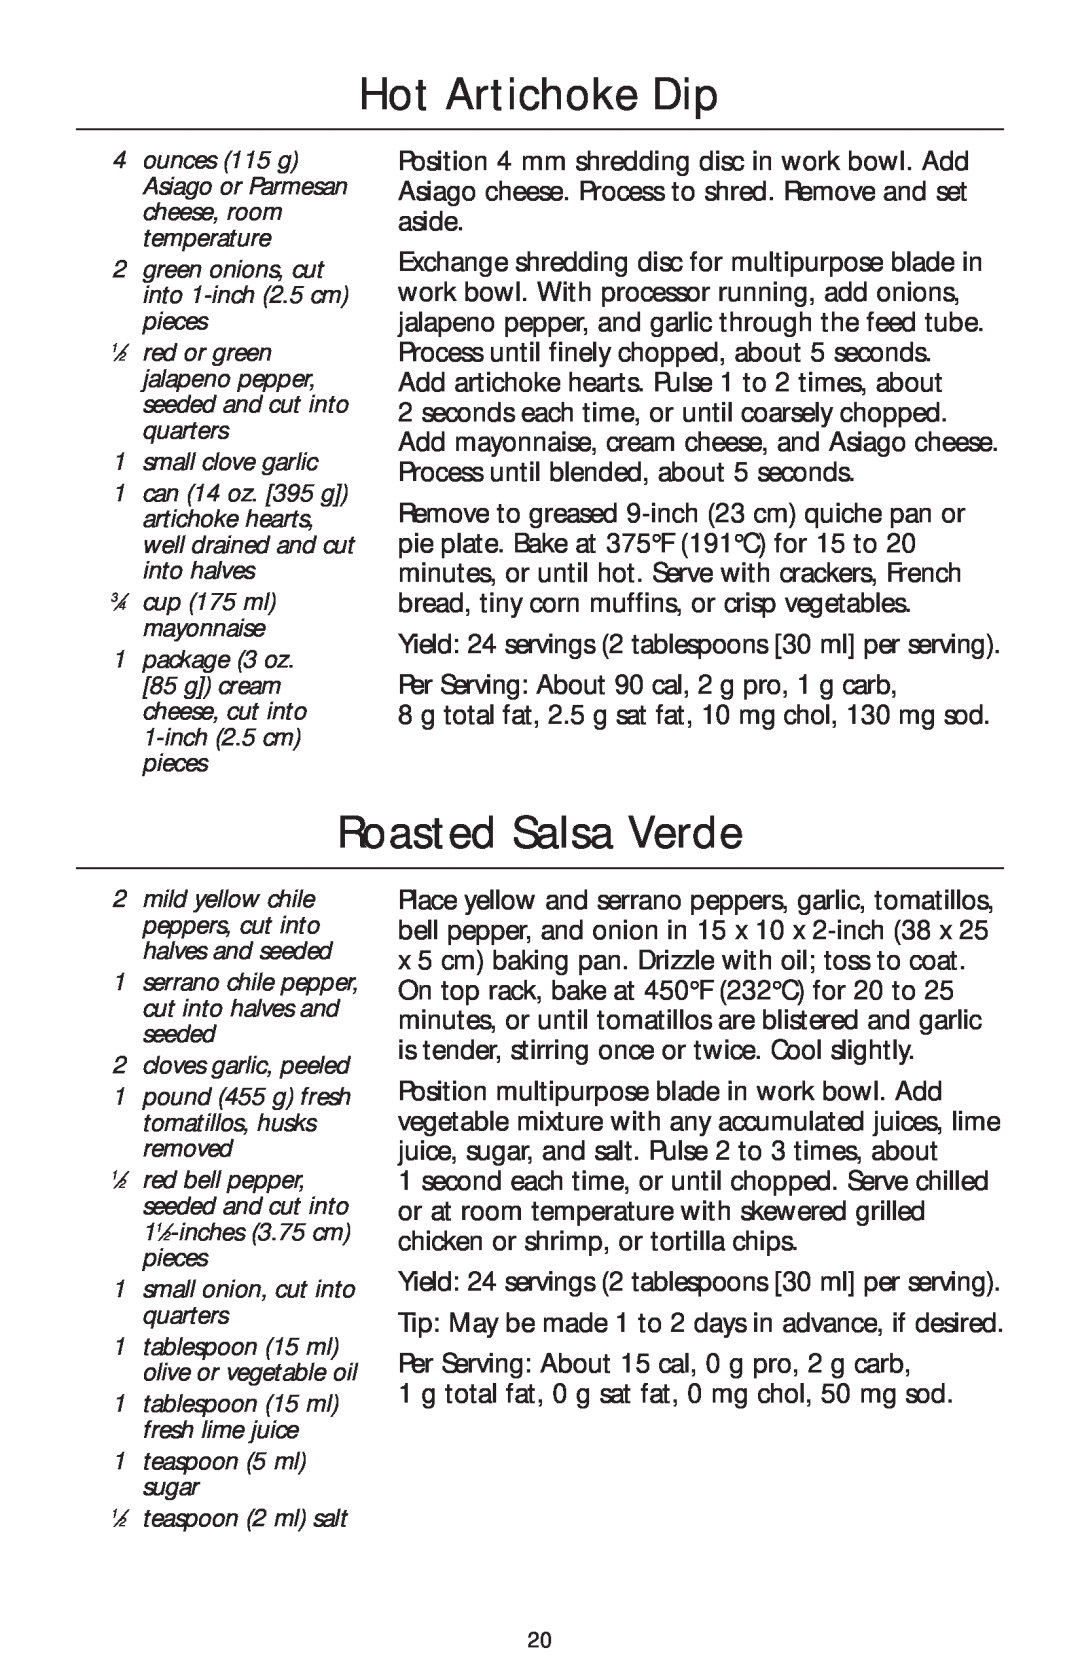 KitchenAid 4KFP740 manual Hot Artichoke Dip, Roasted Salsa Verde 